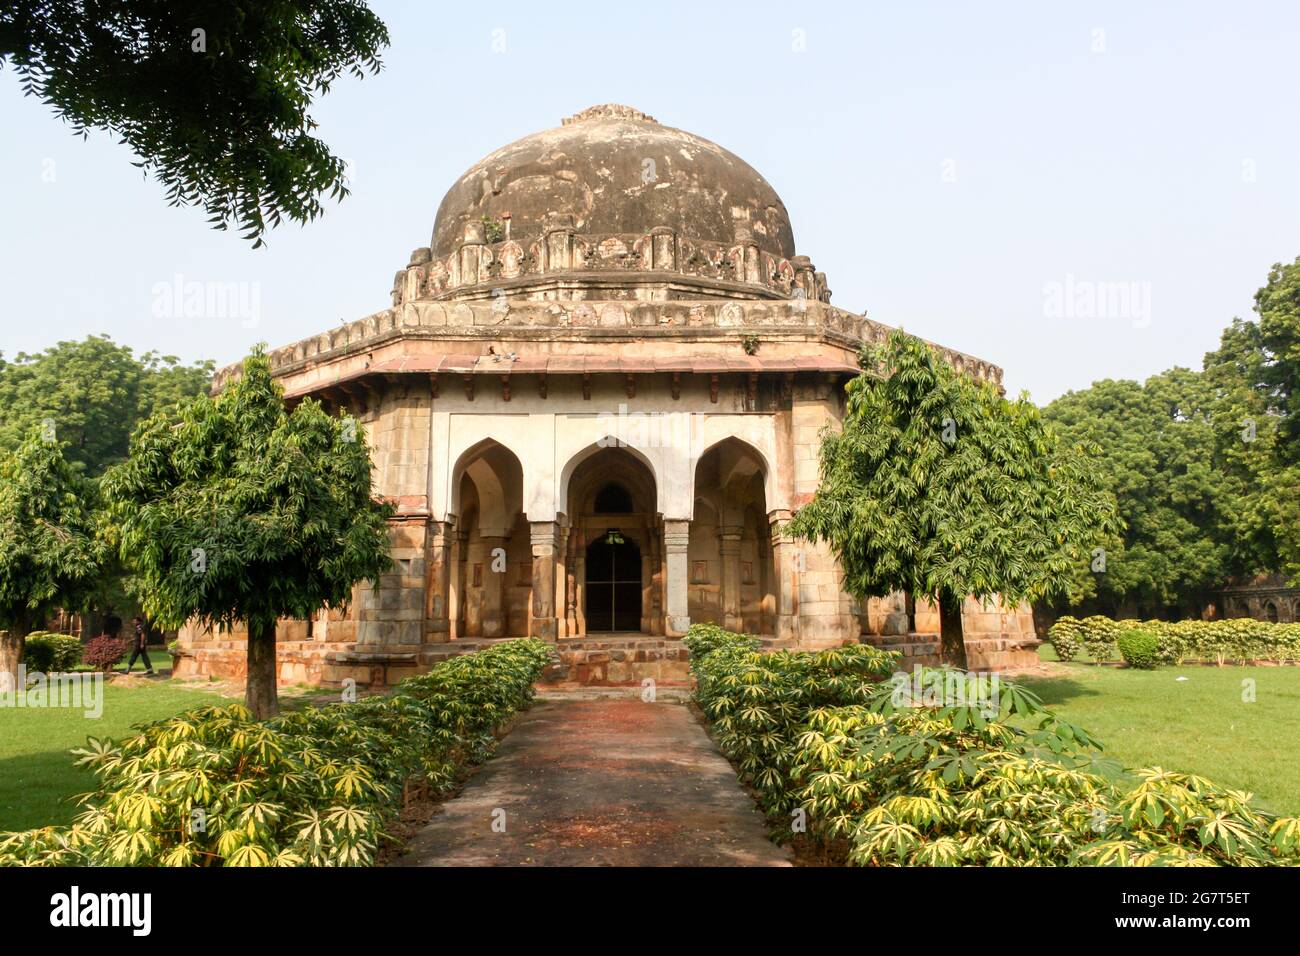 Sikandar Lodi Tomb - Architecture of Mughal monuments at Lodi Gardens in New Delhi, India Stock Photo